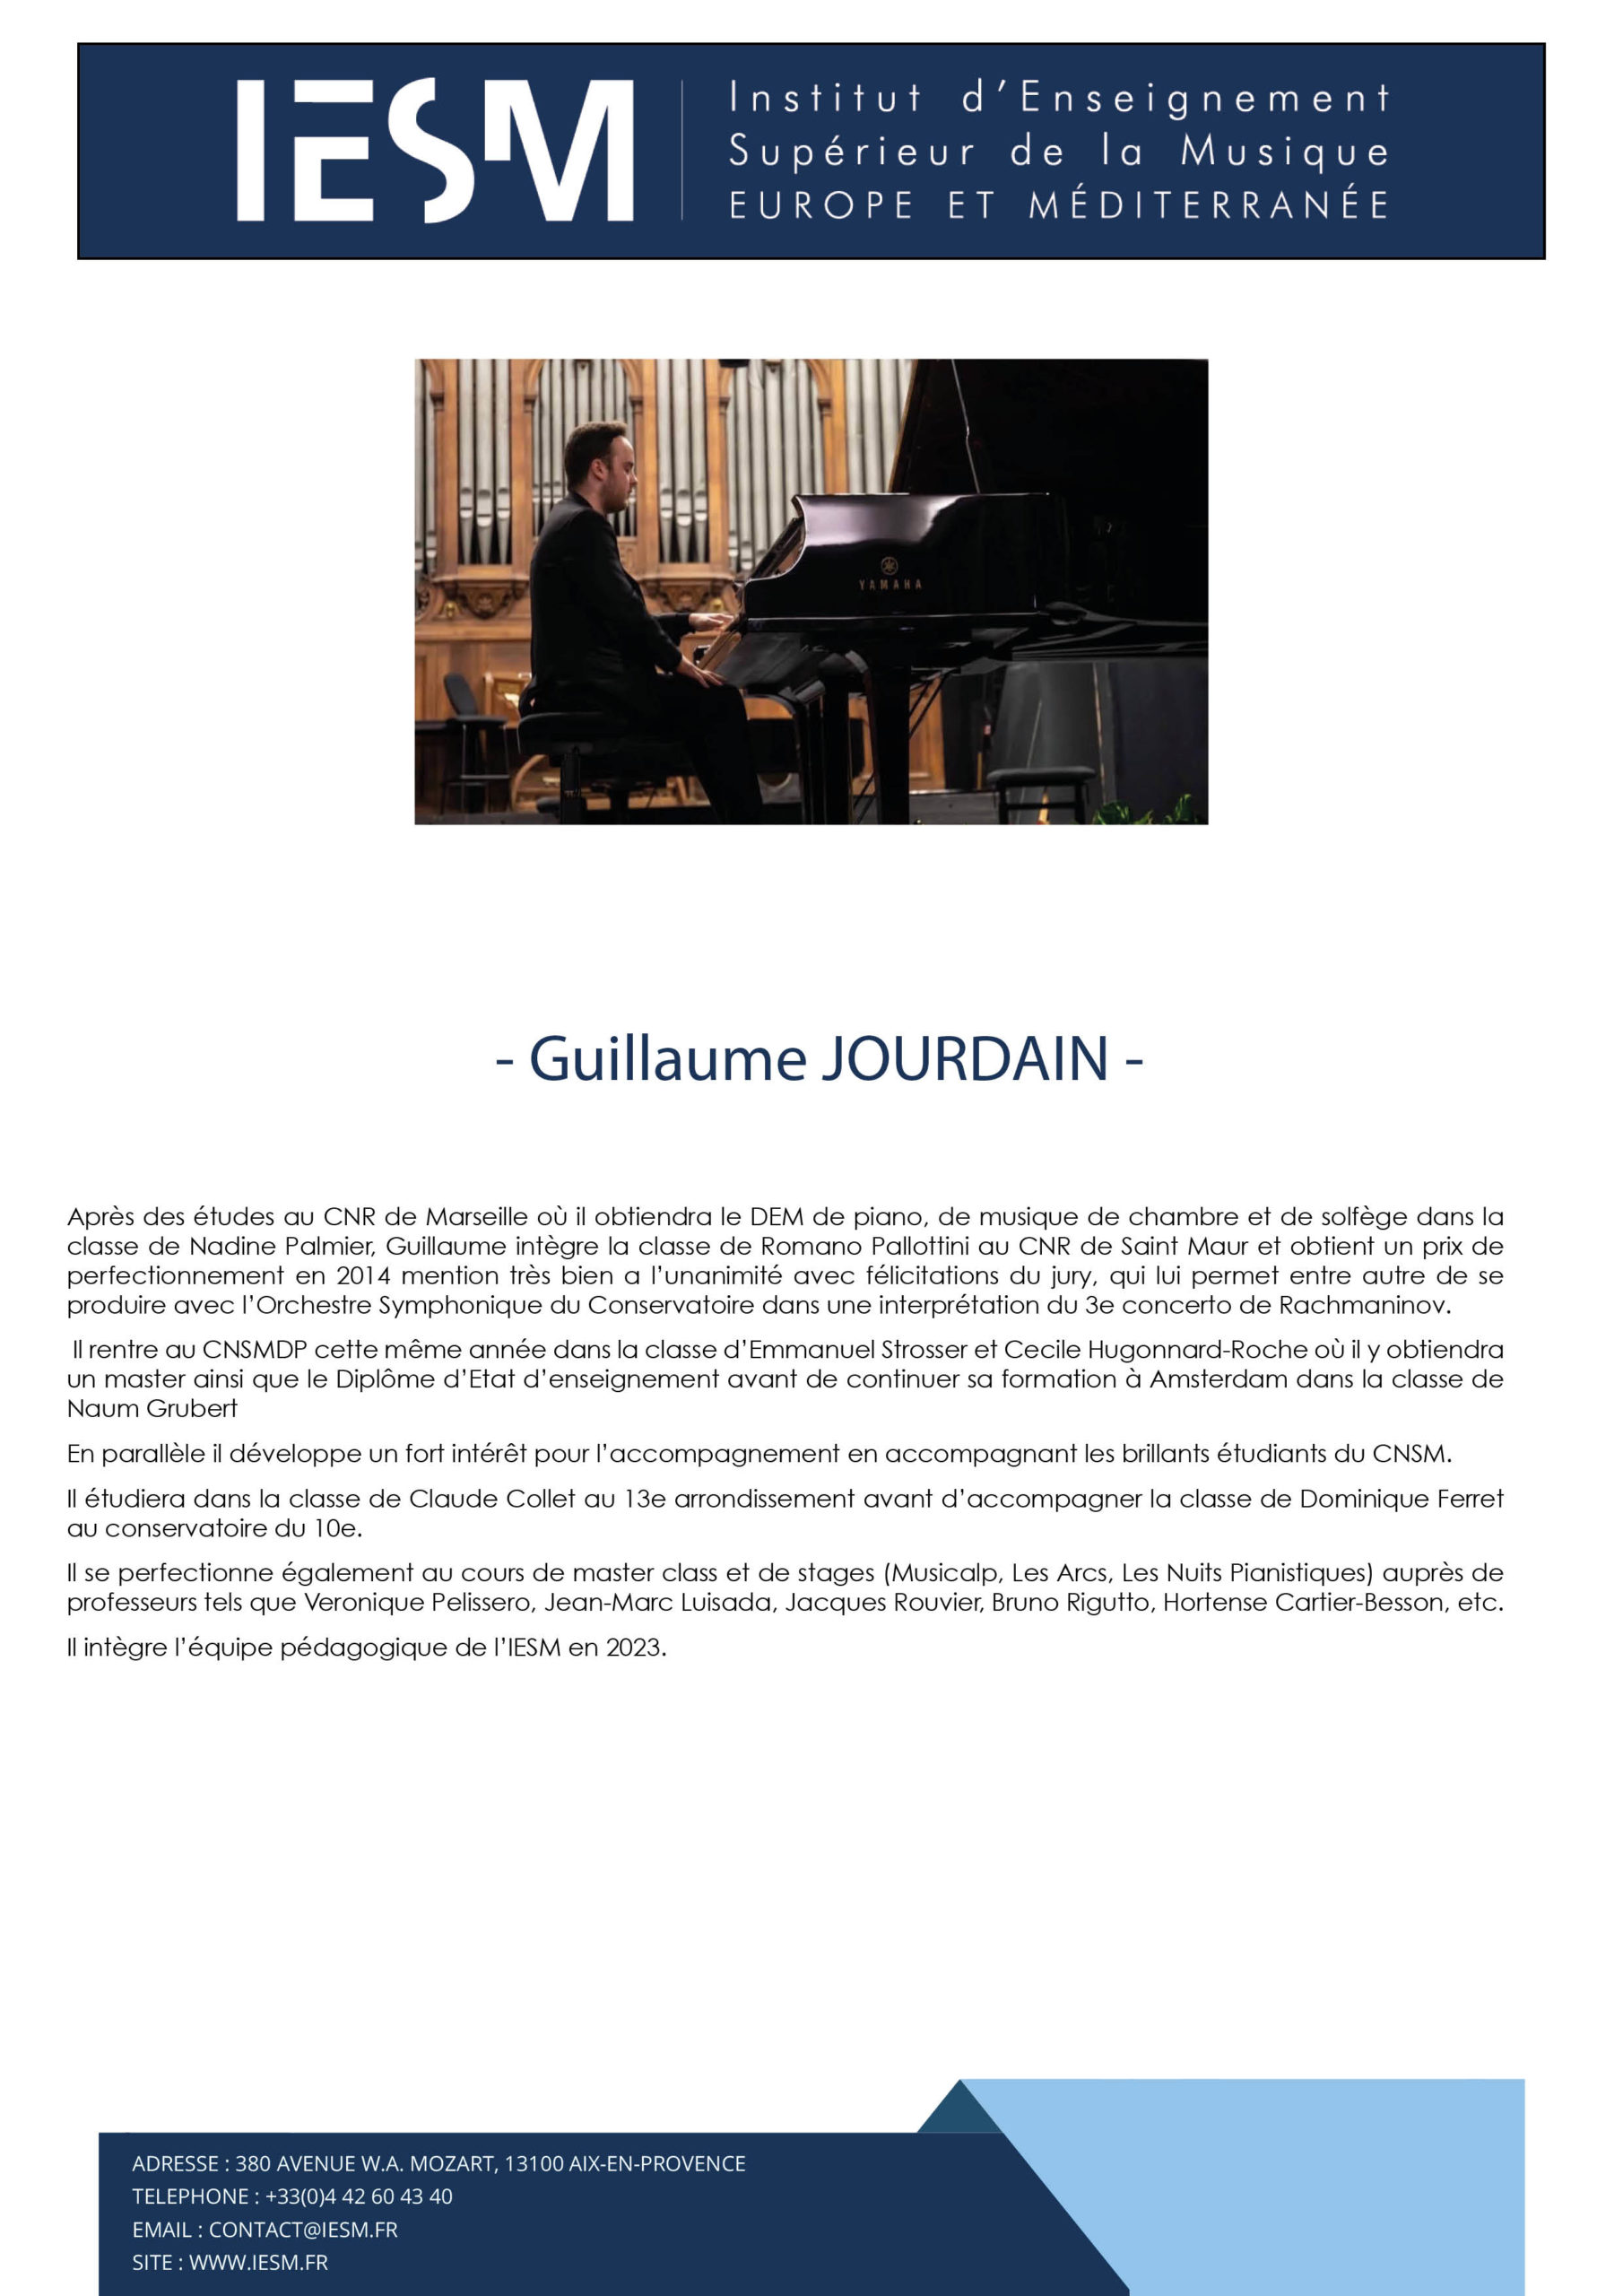 Bio Guillaume JOURDAIN scaled